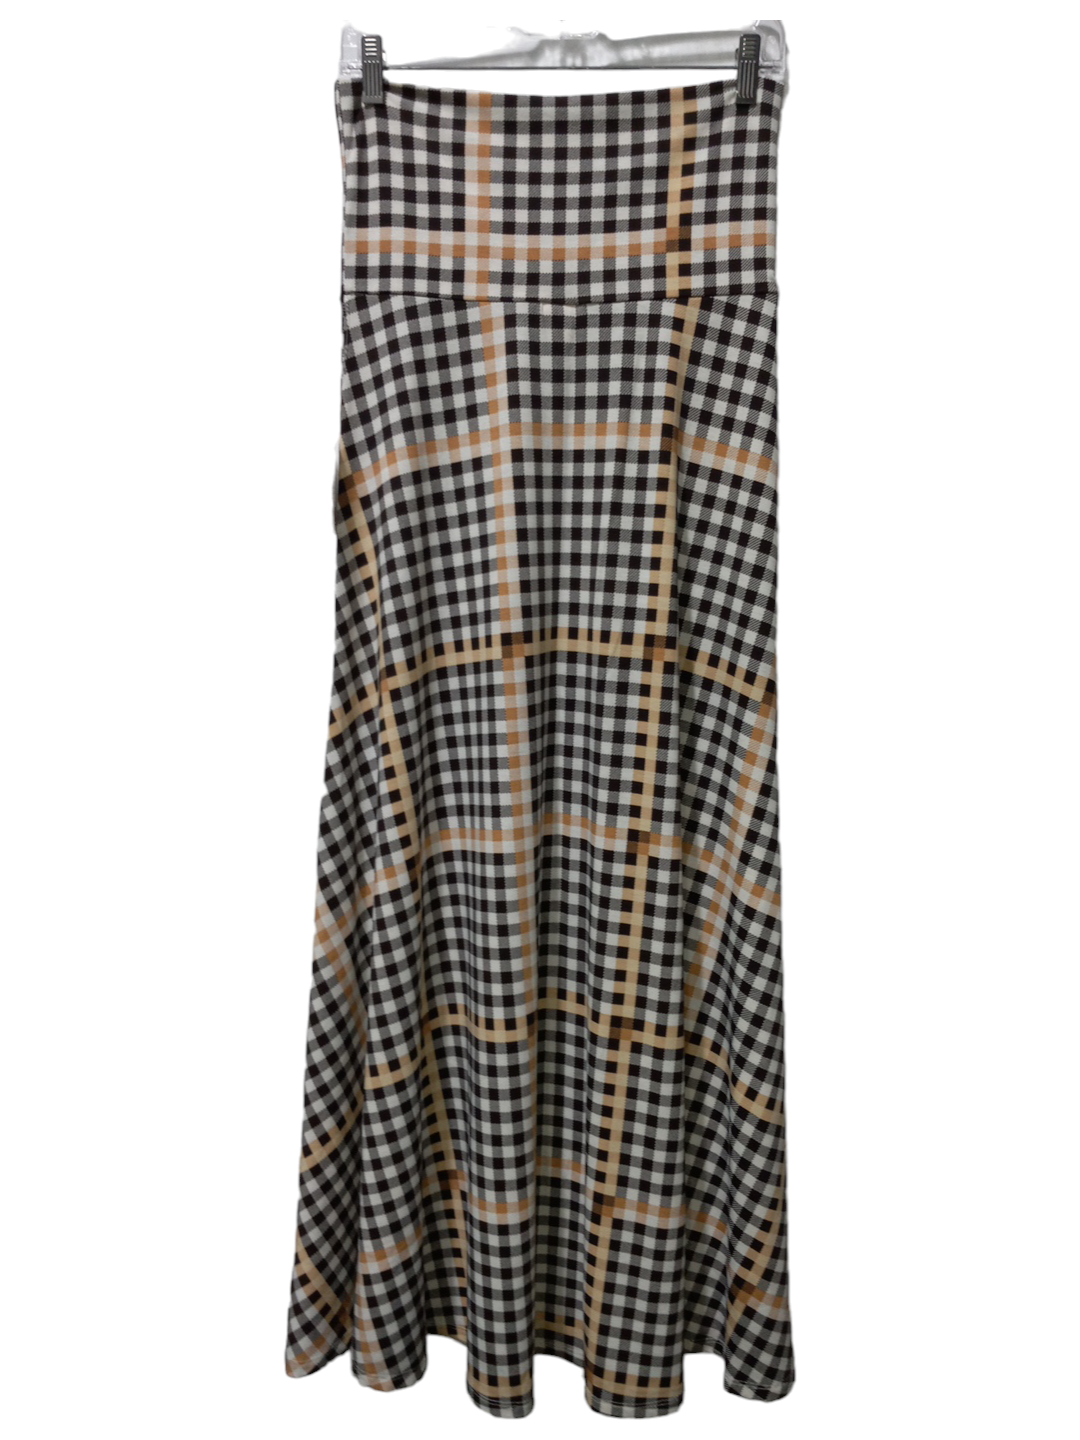 Plaid Pattern Skirt Maxi Lularoe, Size S